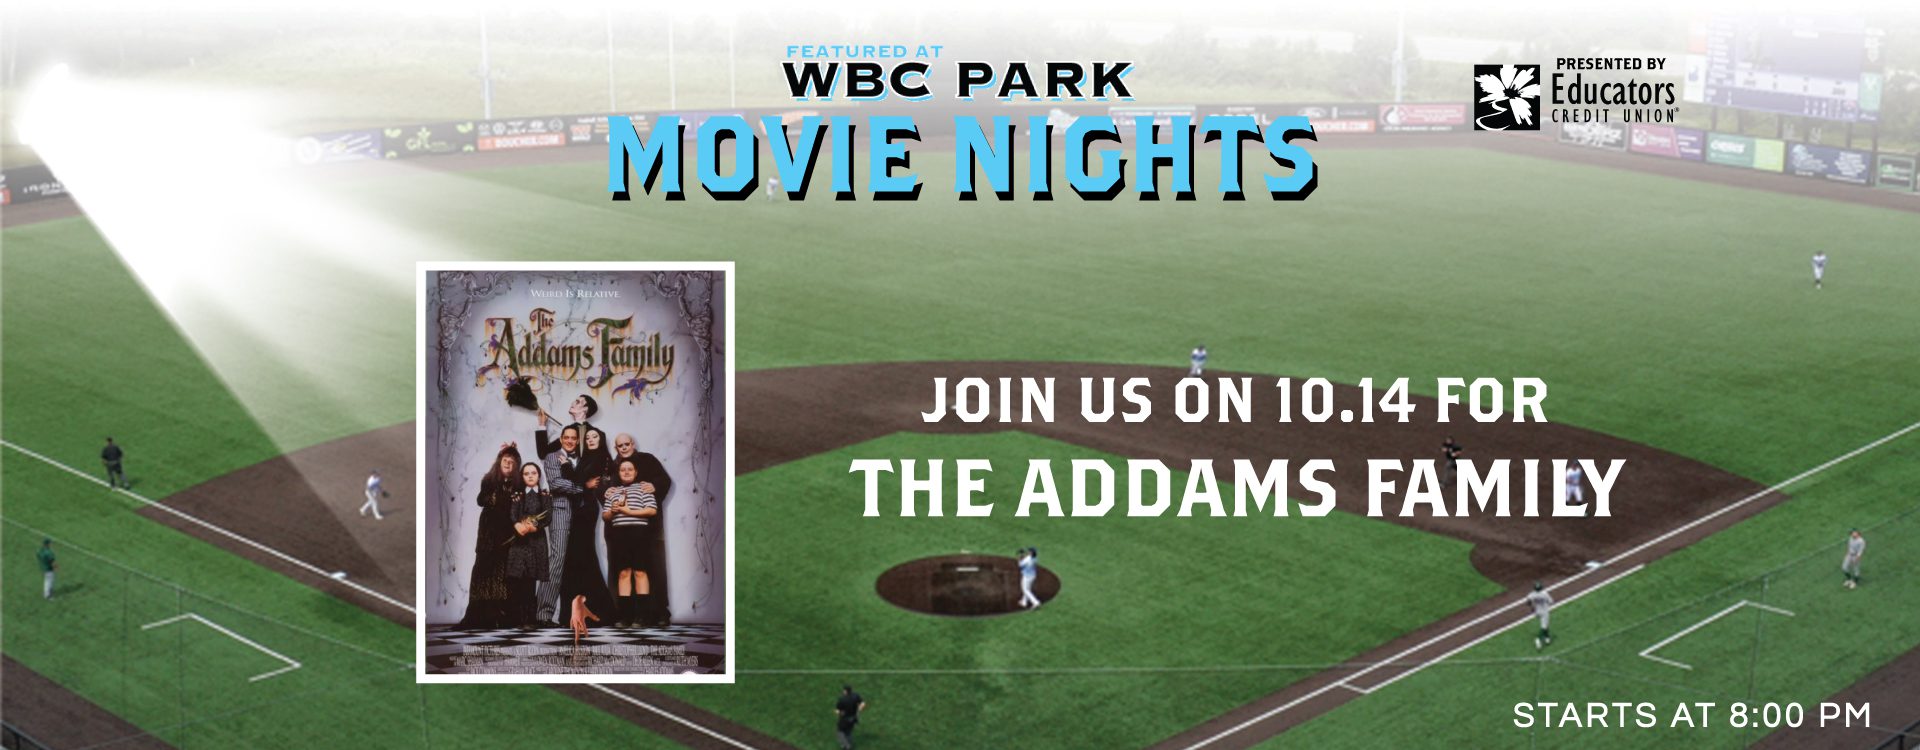 The Addams Family at WBC Park